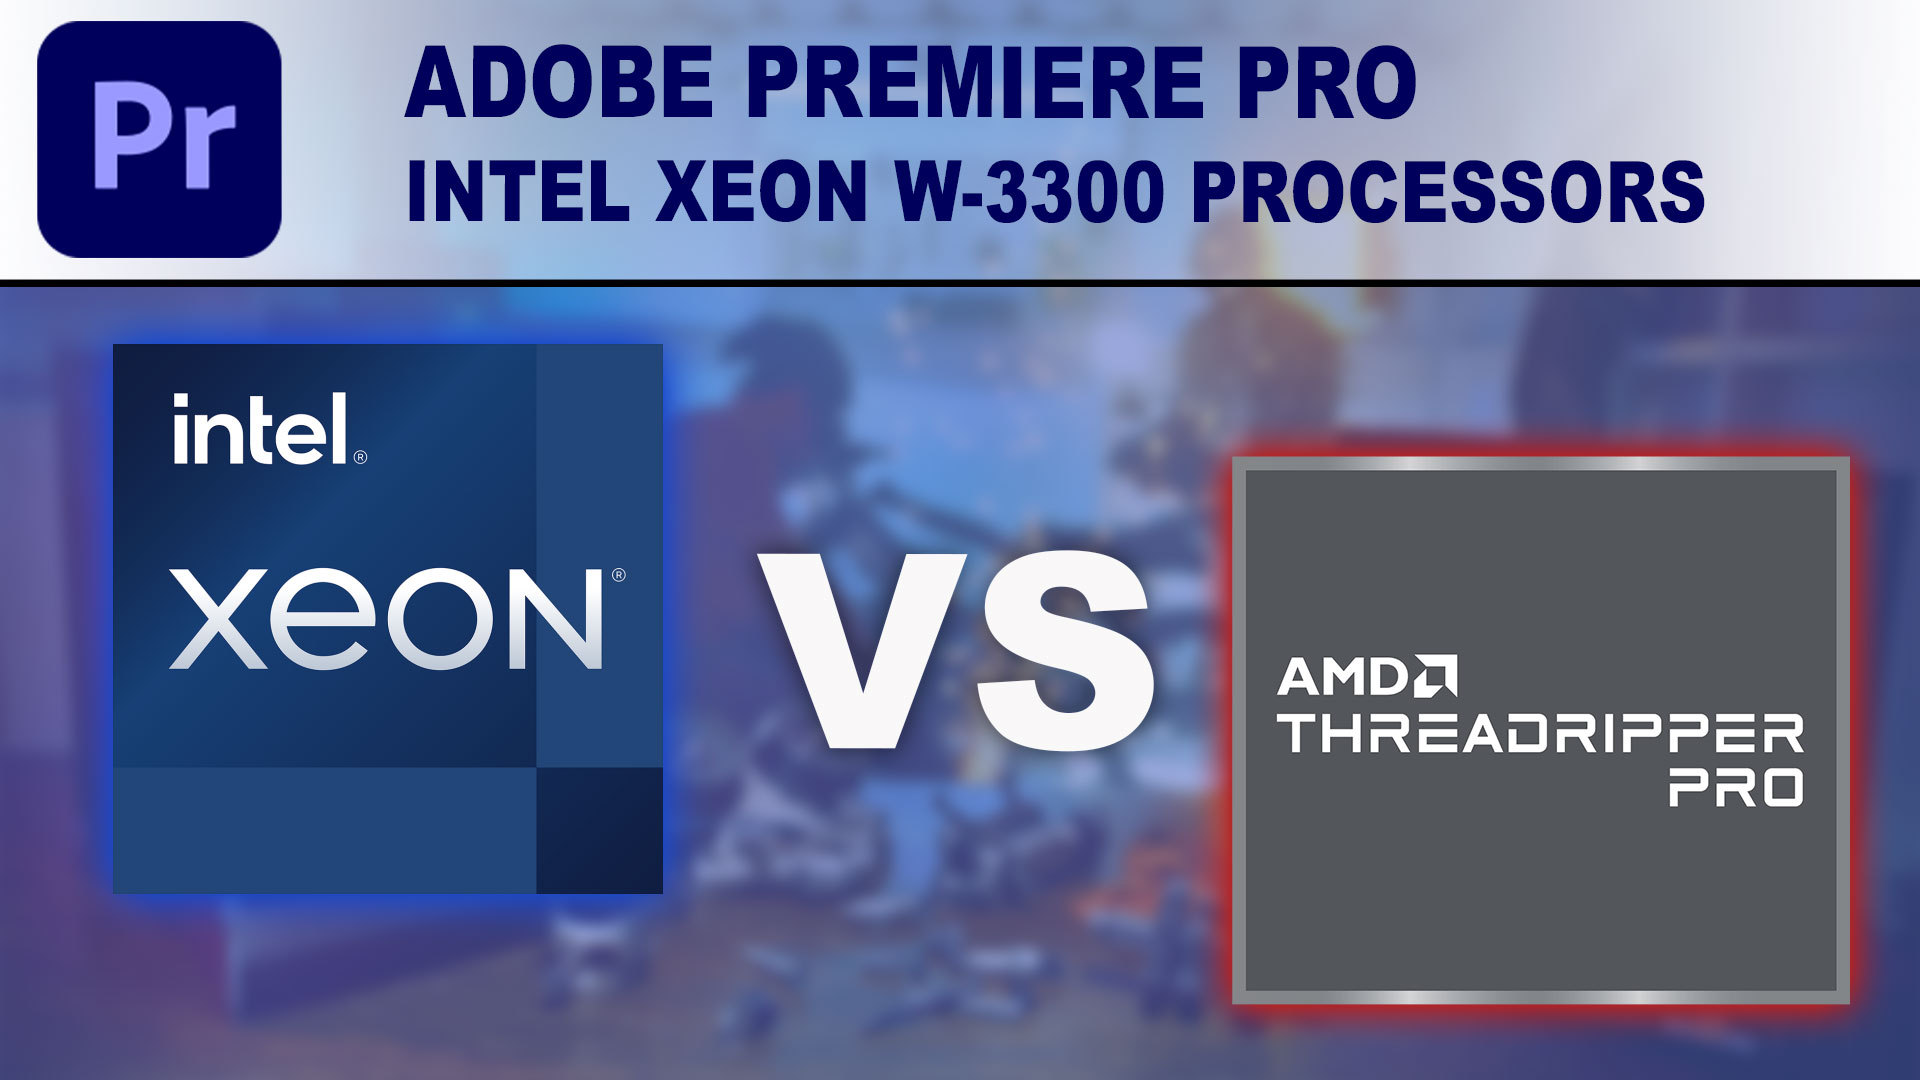 Intel Xeon W-3300 Processors for Premiere Pro